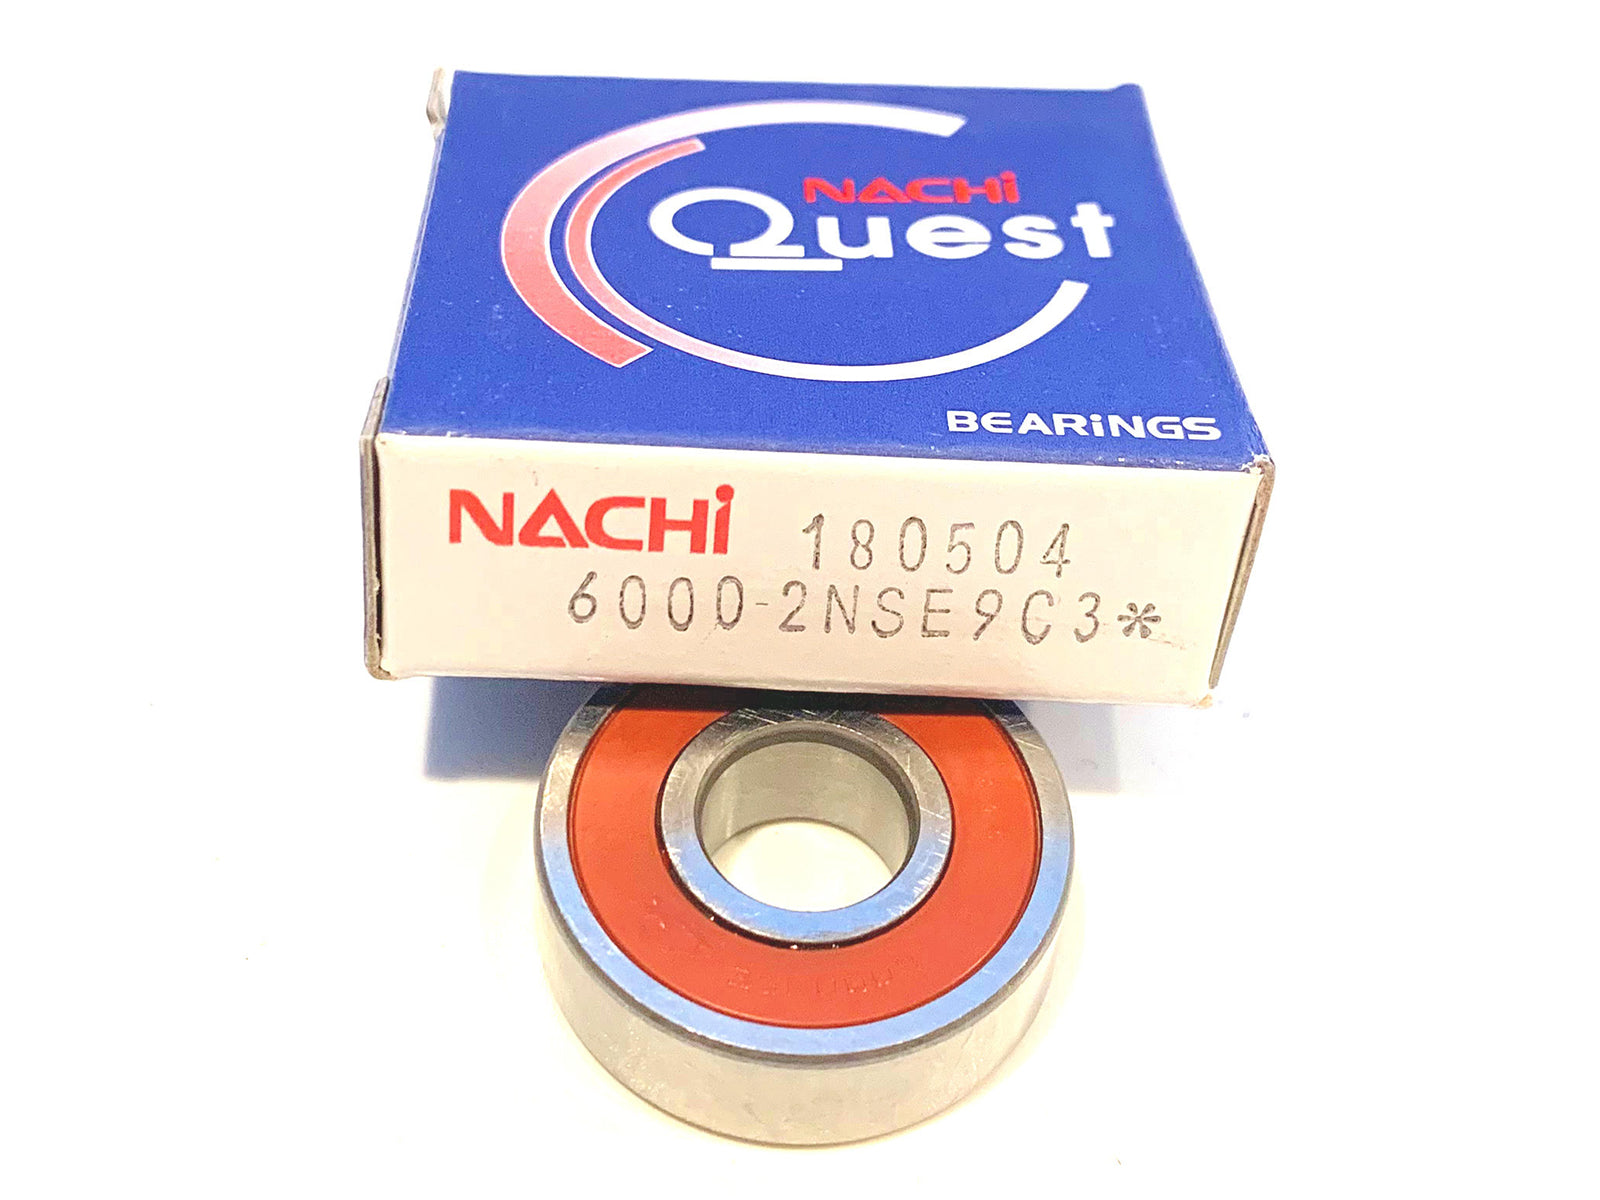 6000-2NSE9 C3 NACHI Ball Bearing - ppdistributors